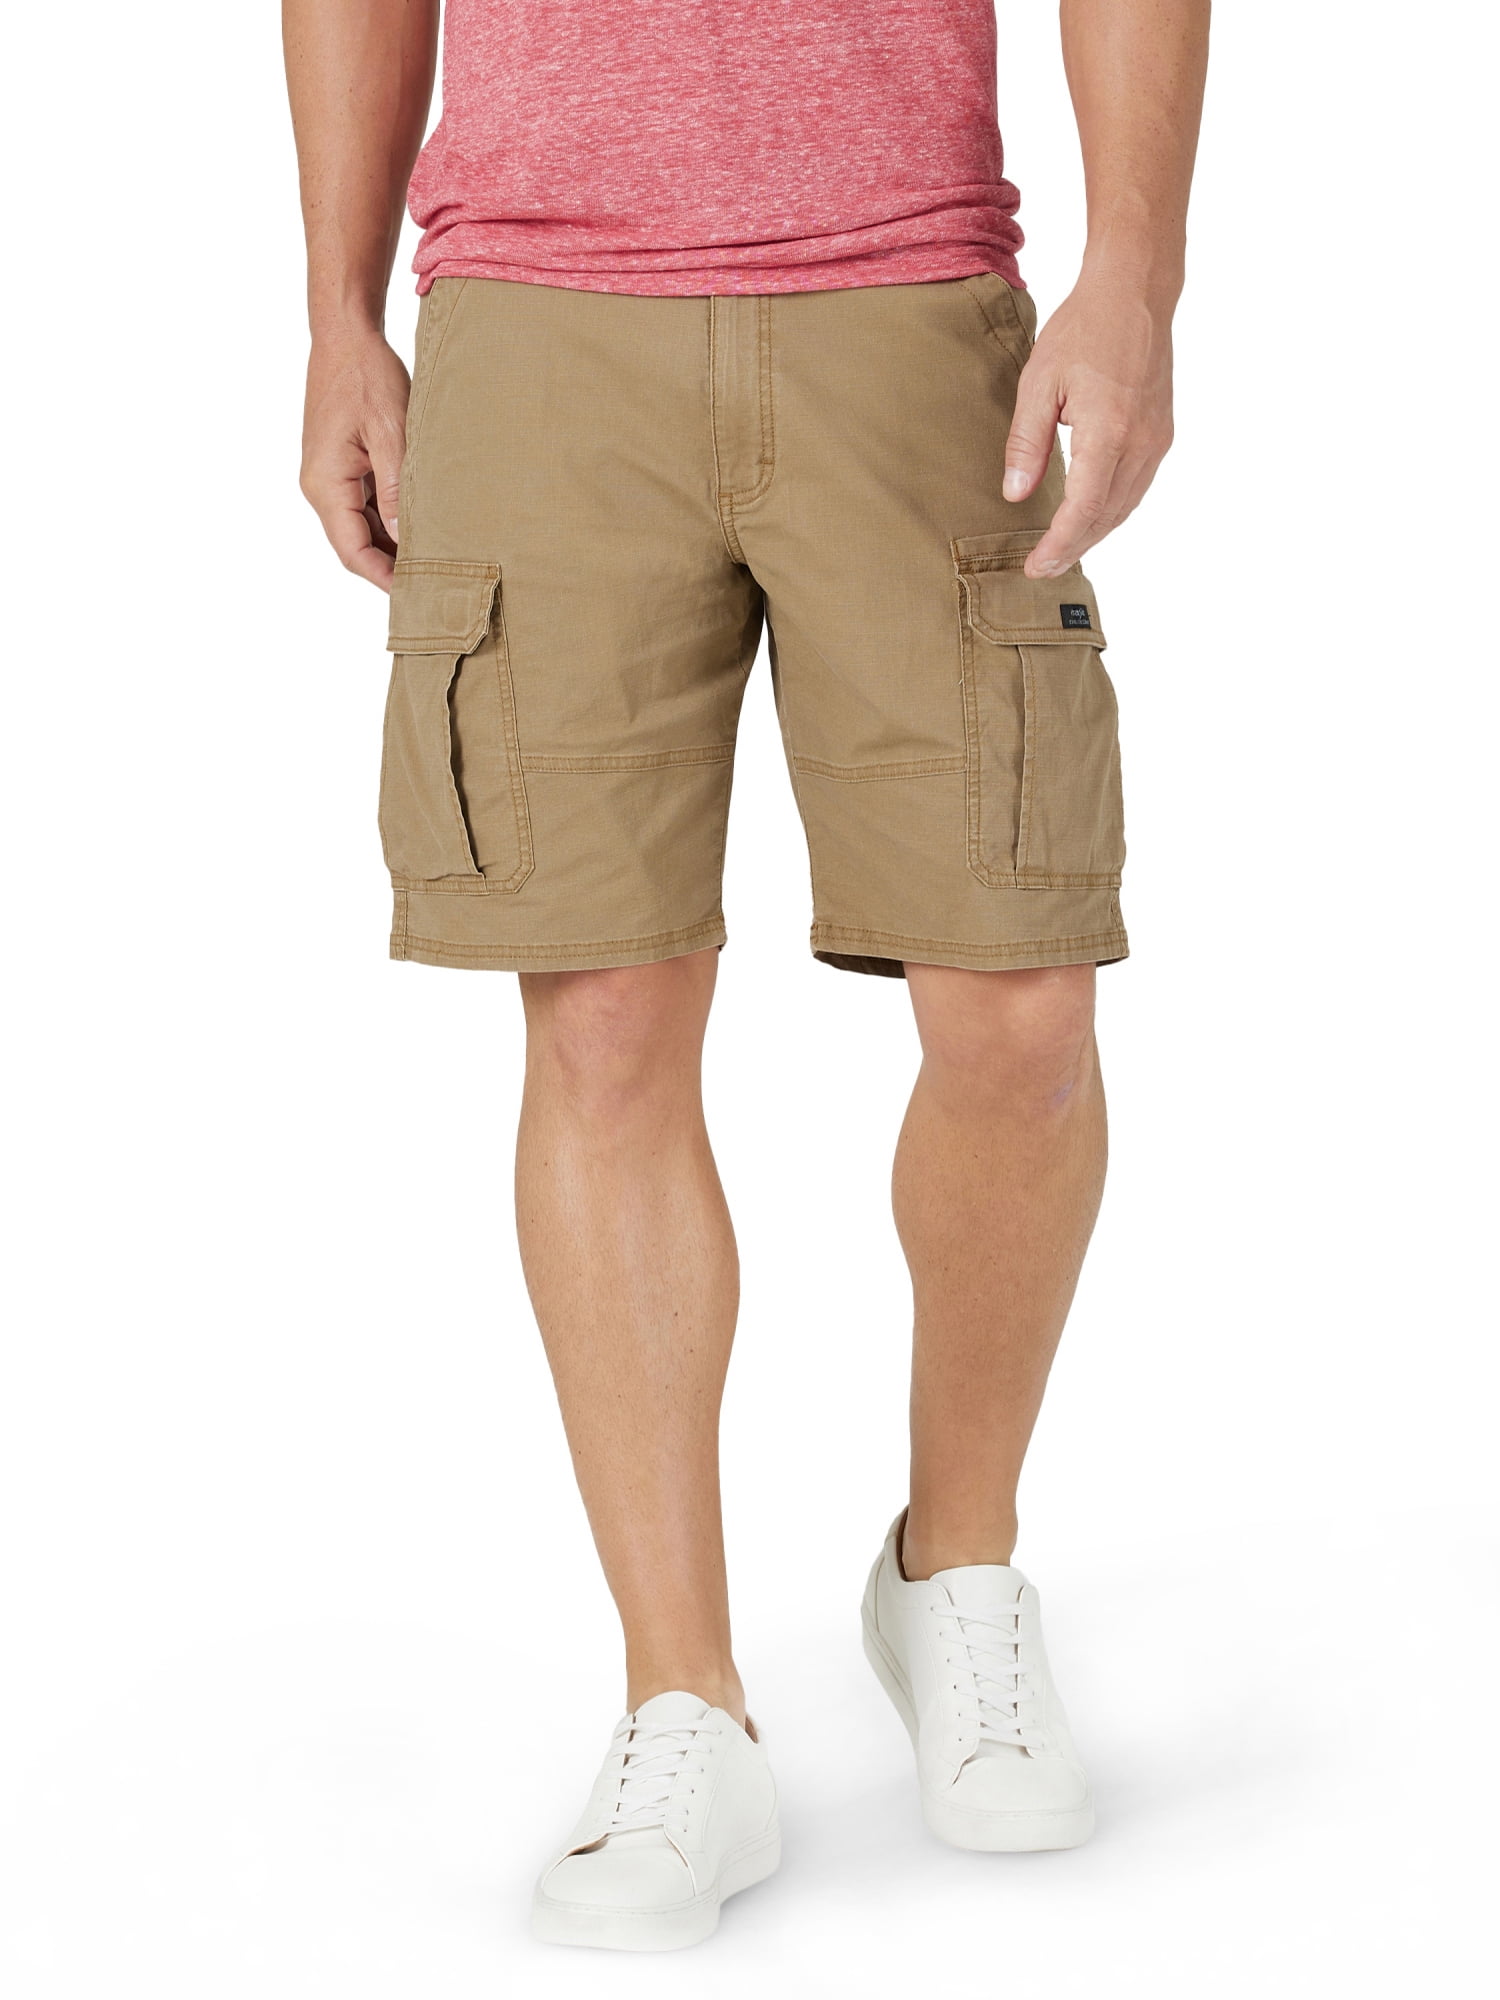 Retail: $39.99 Quiksilver Men's Camo Measure Cargo Shorts